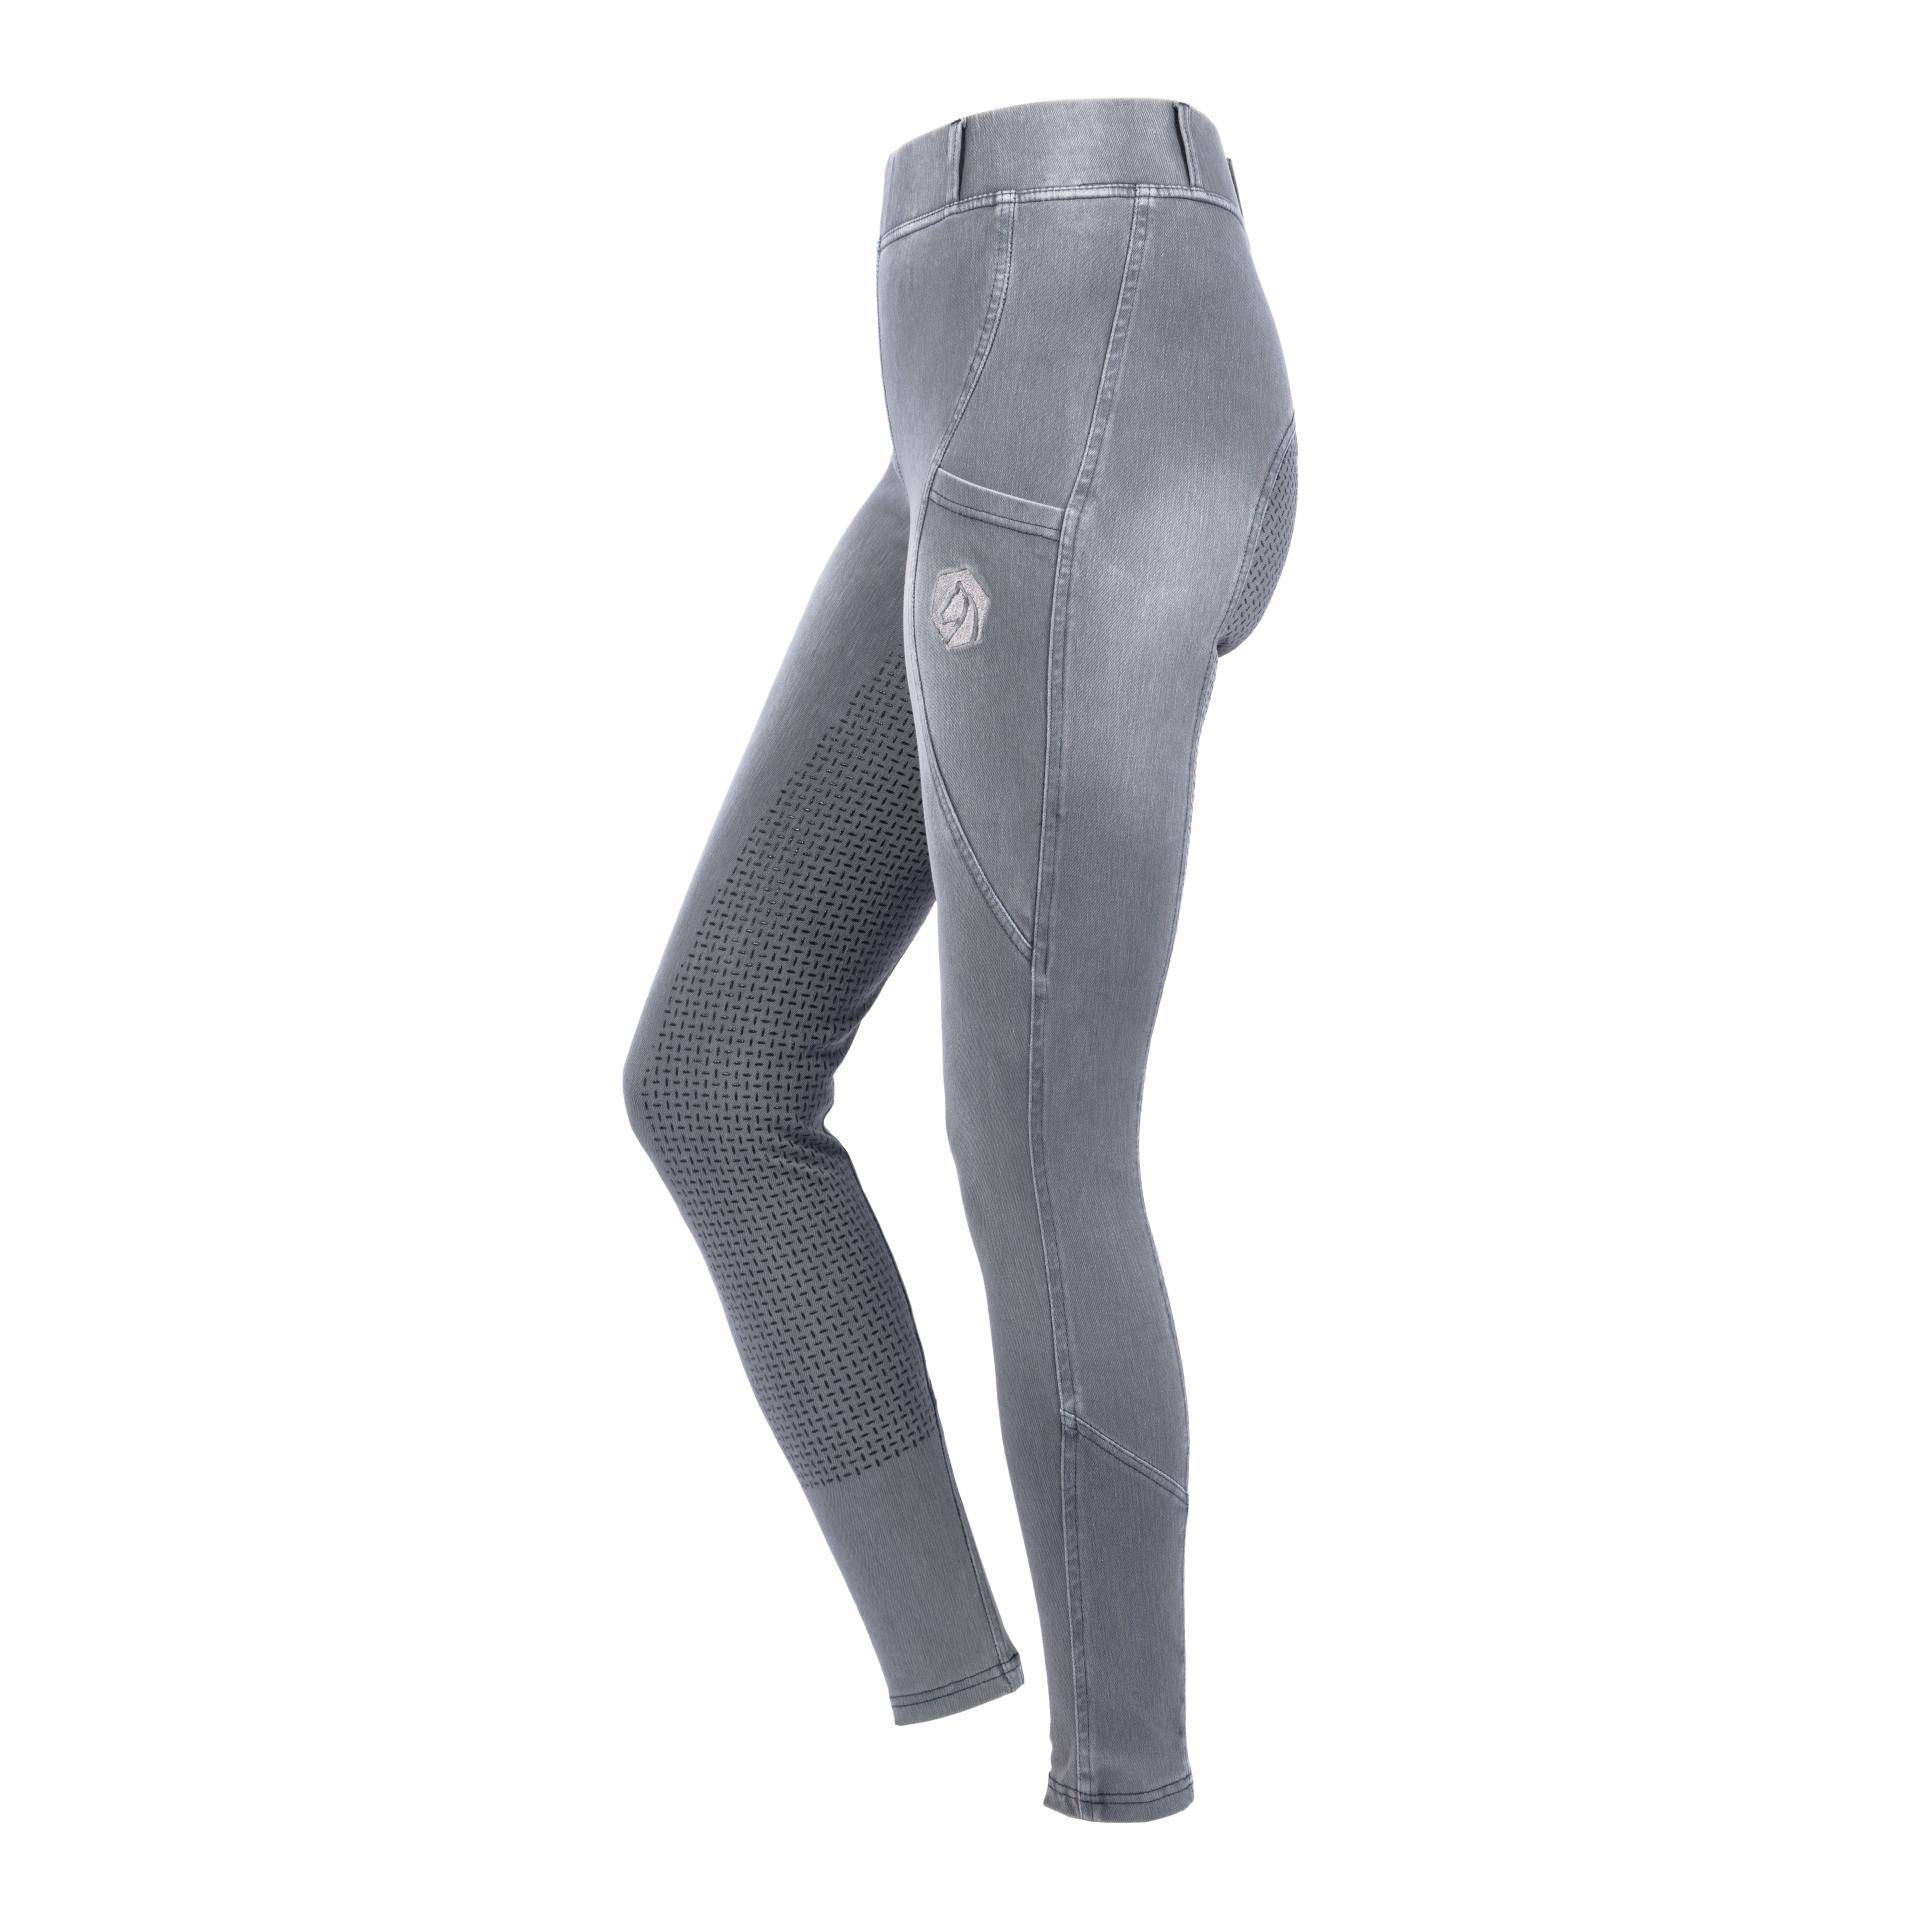 Marengo Reitleggings Jeans Fullgrip Damen Farbe: Ice Grey Denim, Grösse Bekleidung Damen: XS von Marengo